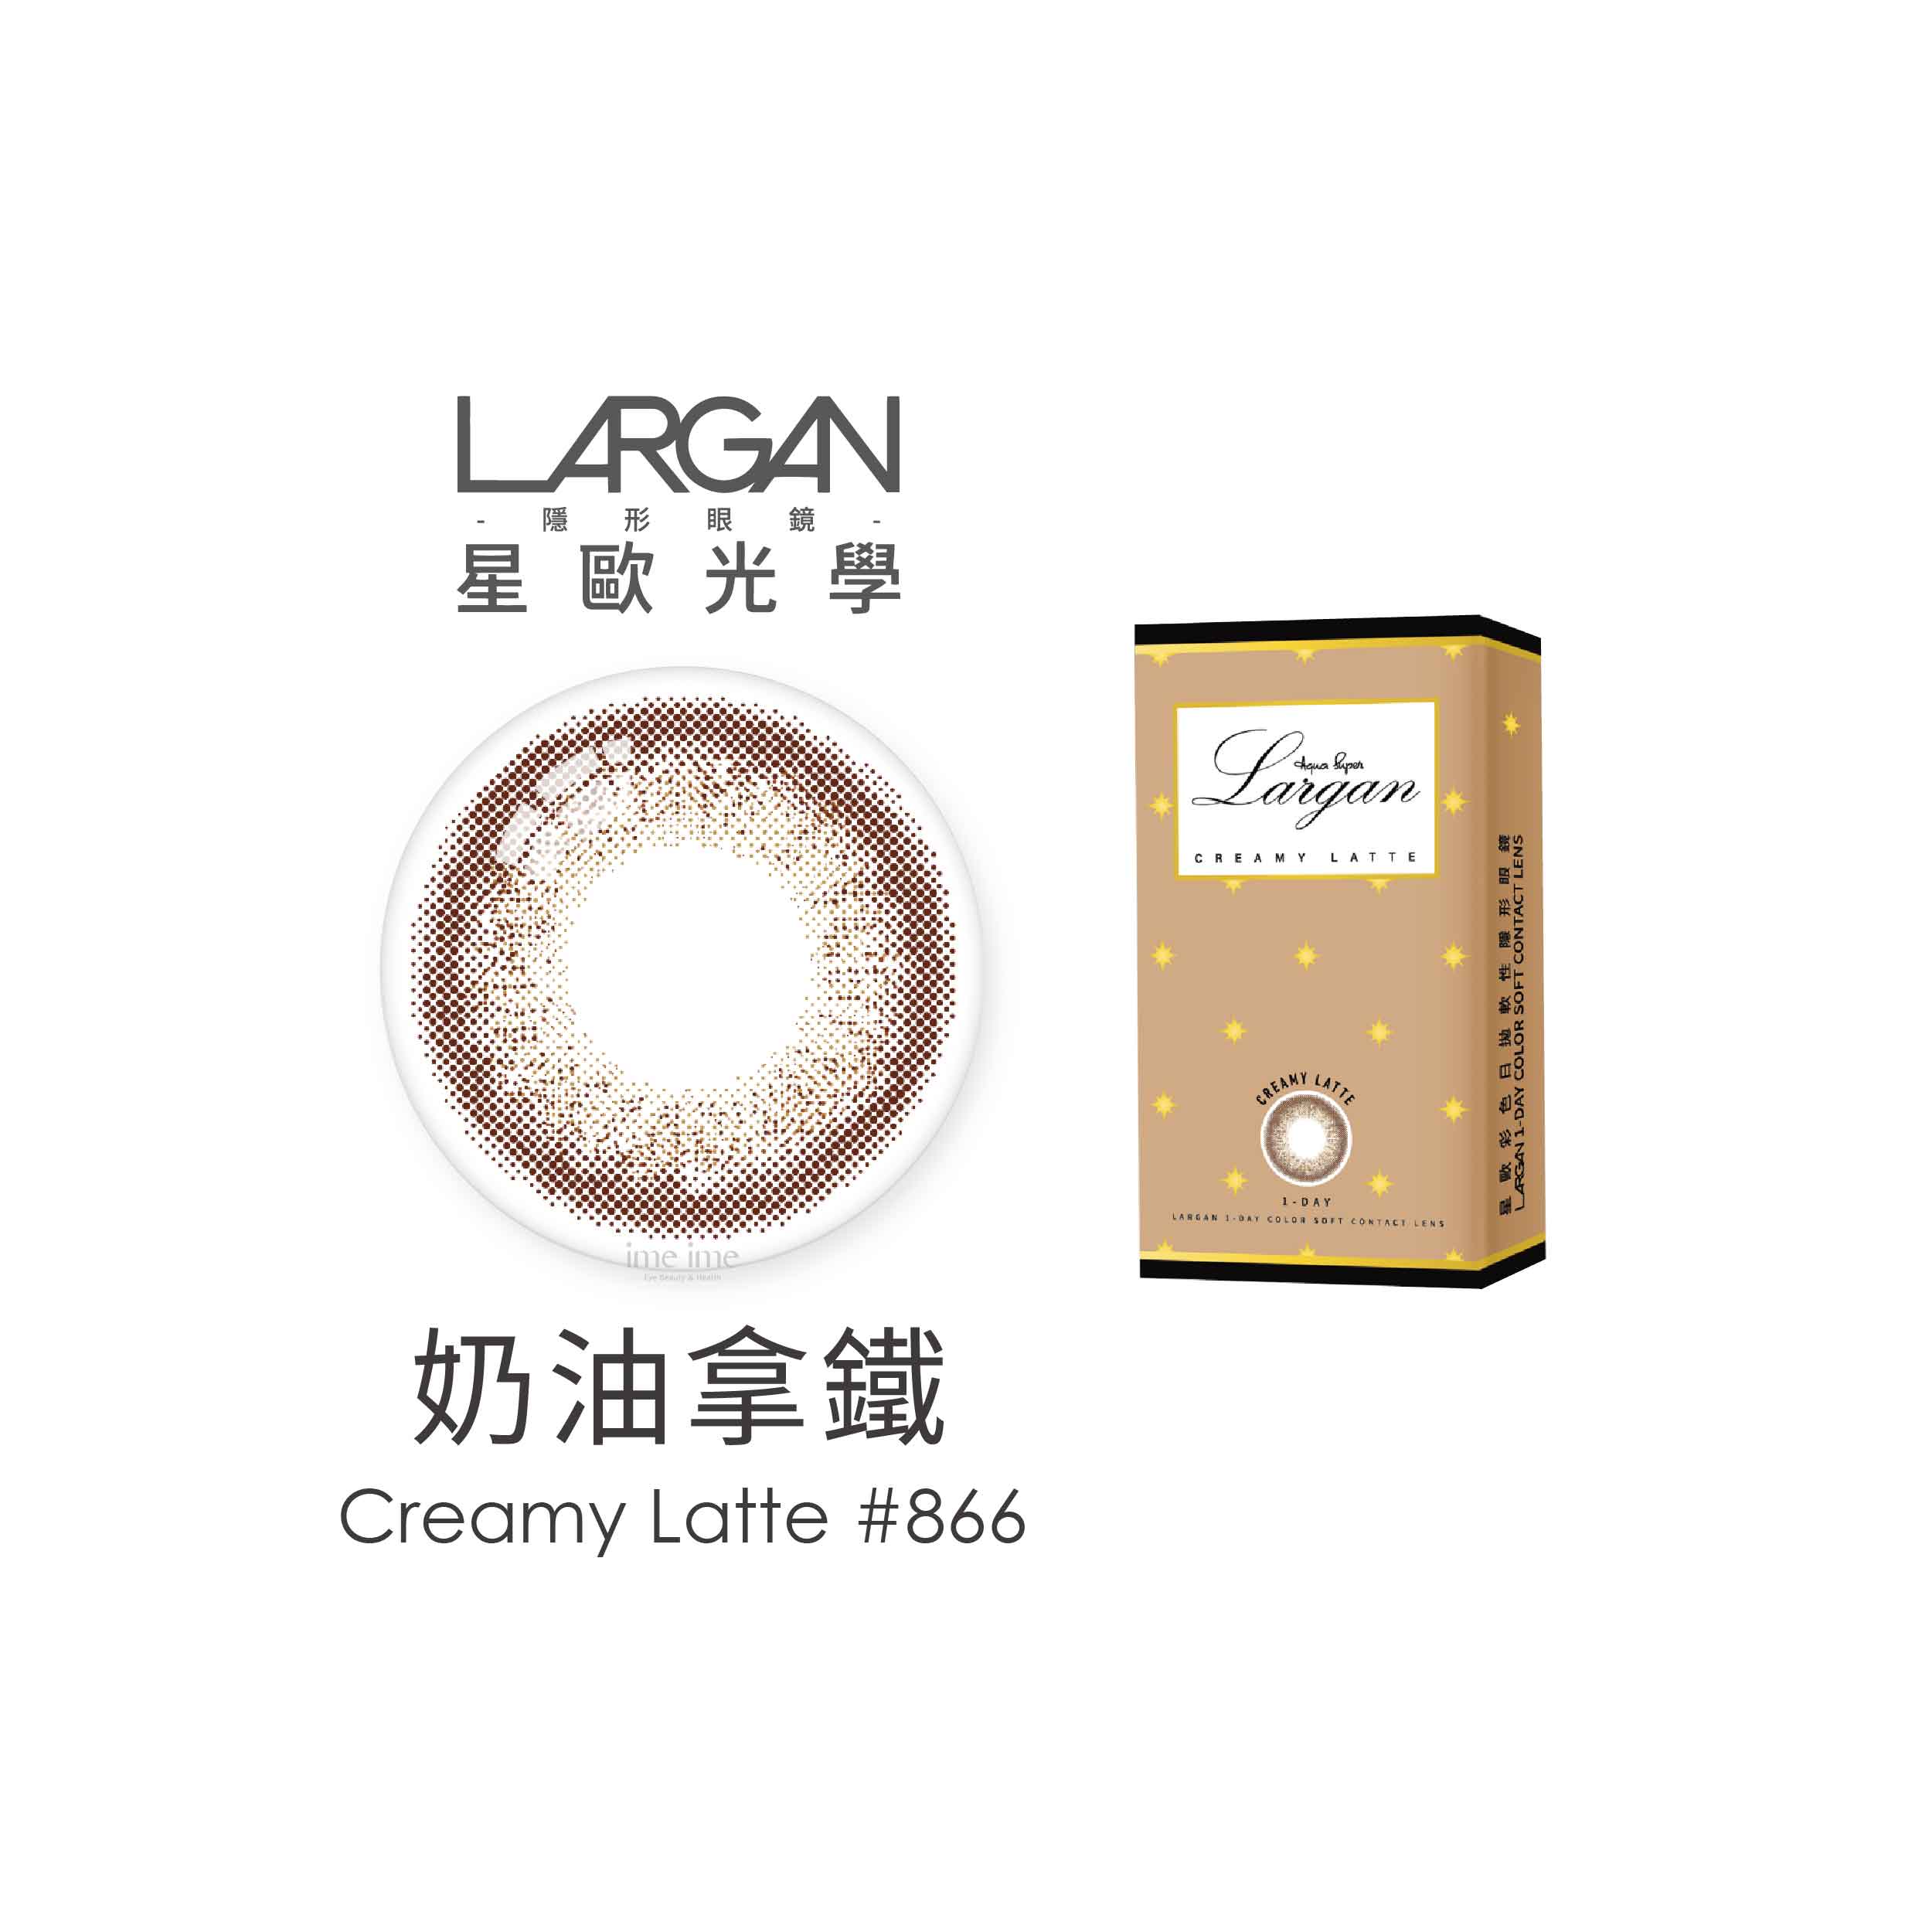 LARGAN星歐星星系列彩色日拋2片裝-奶油拿鐵 Creamy Latte